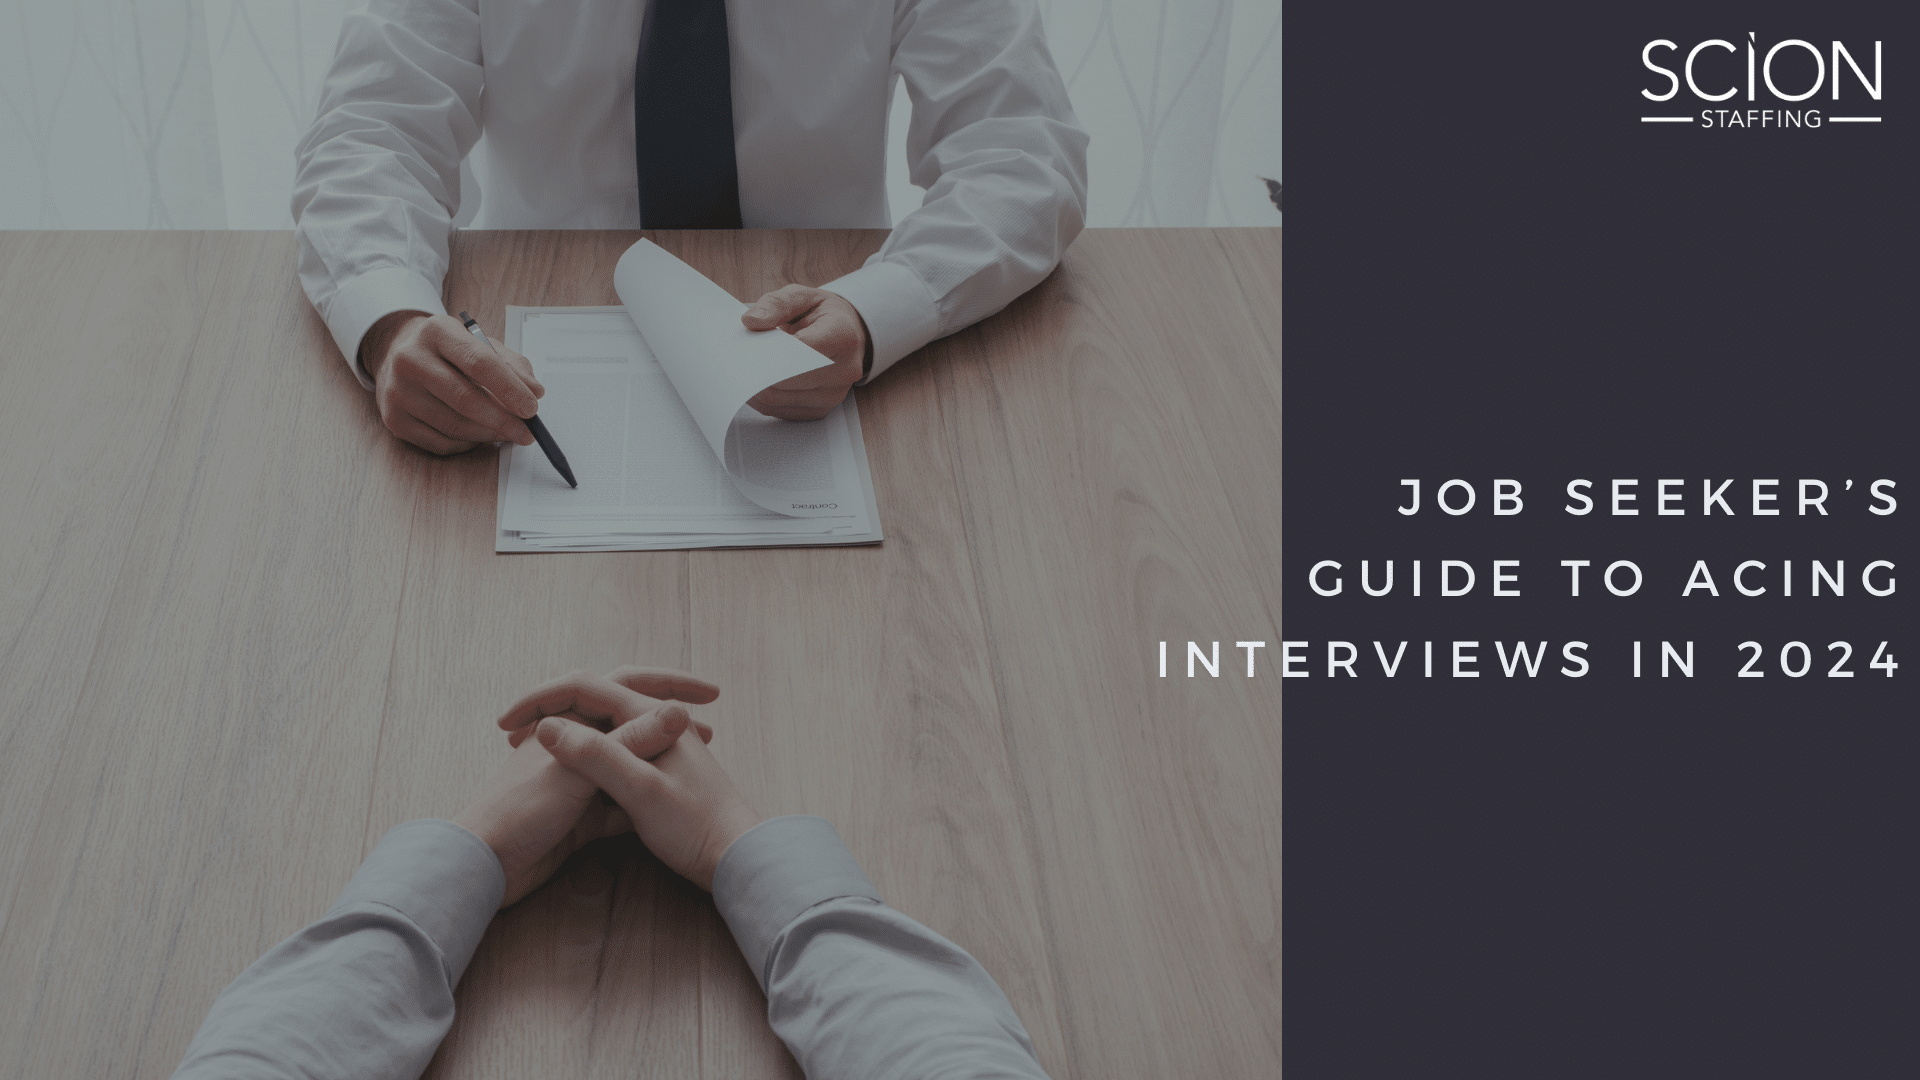 Job Seeker’s Guide to Acing Interviews in 2024